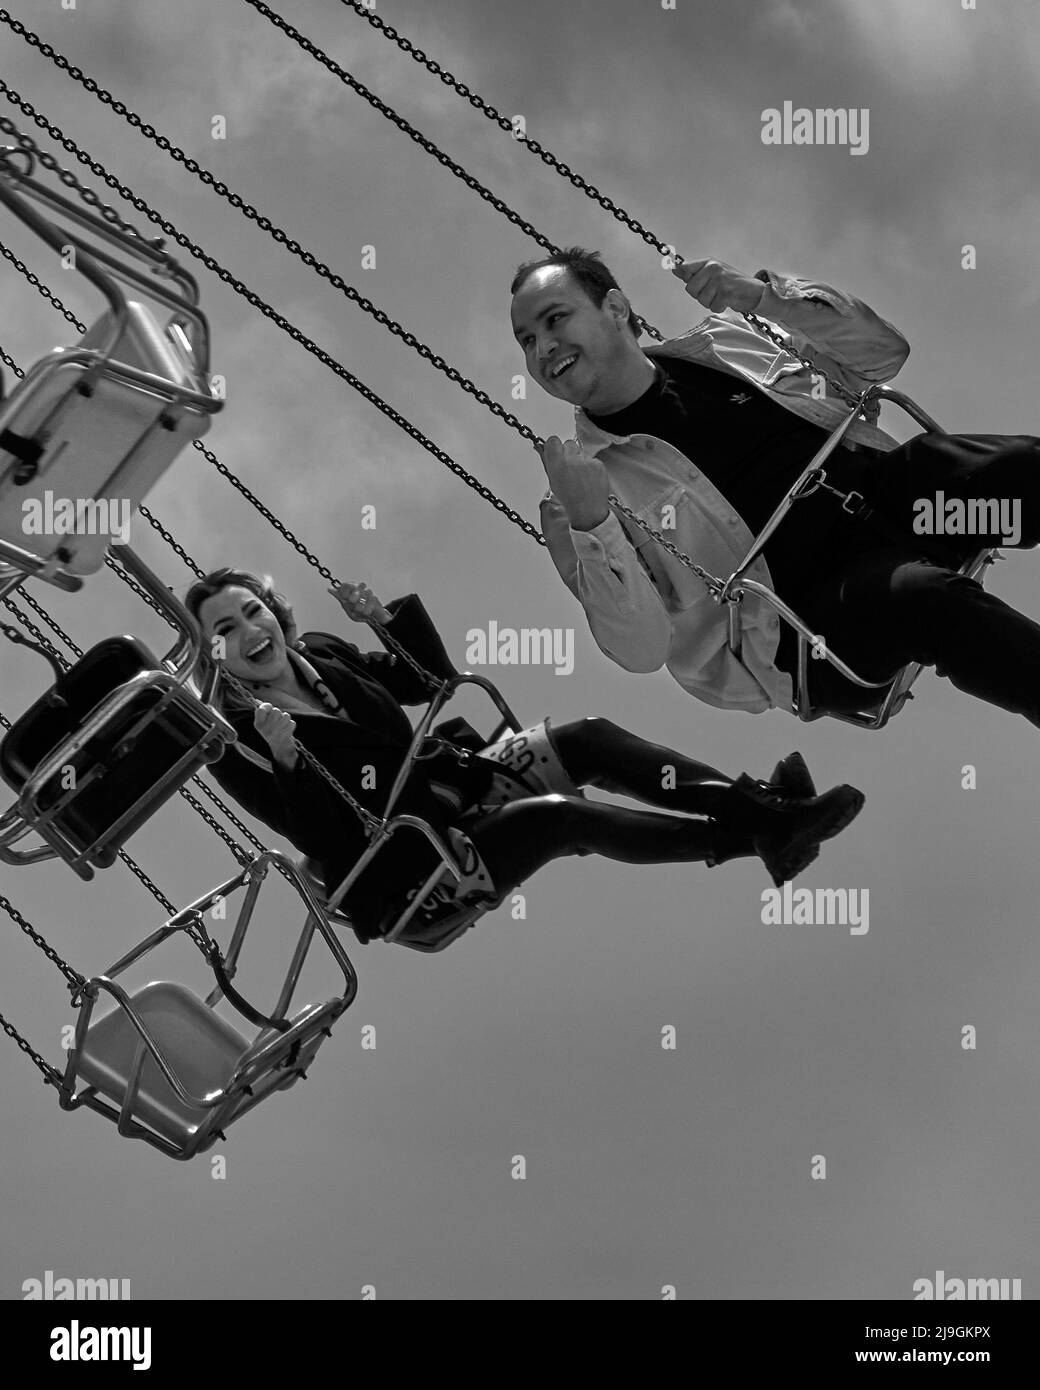 2 people enjoying life flying by overhead on an amusement ride Stock Photo